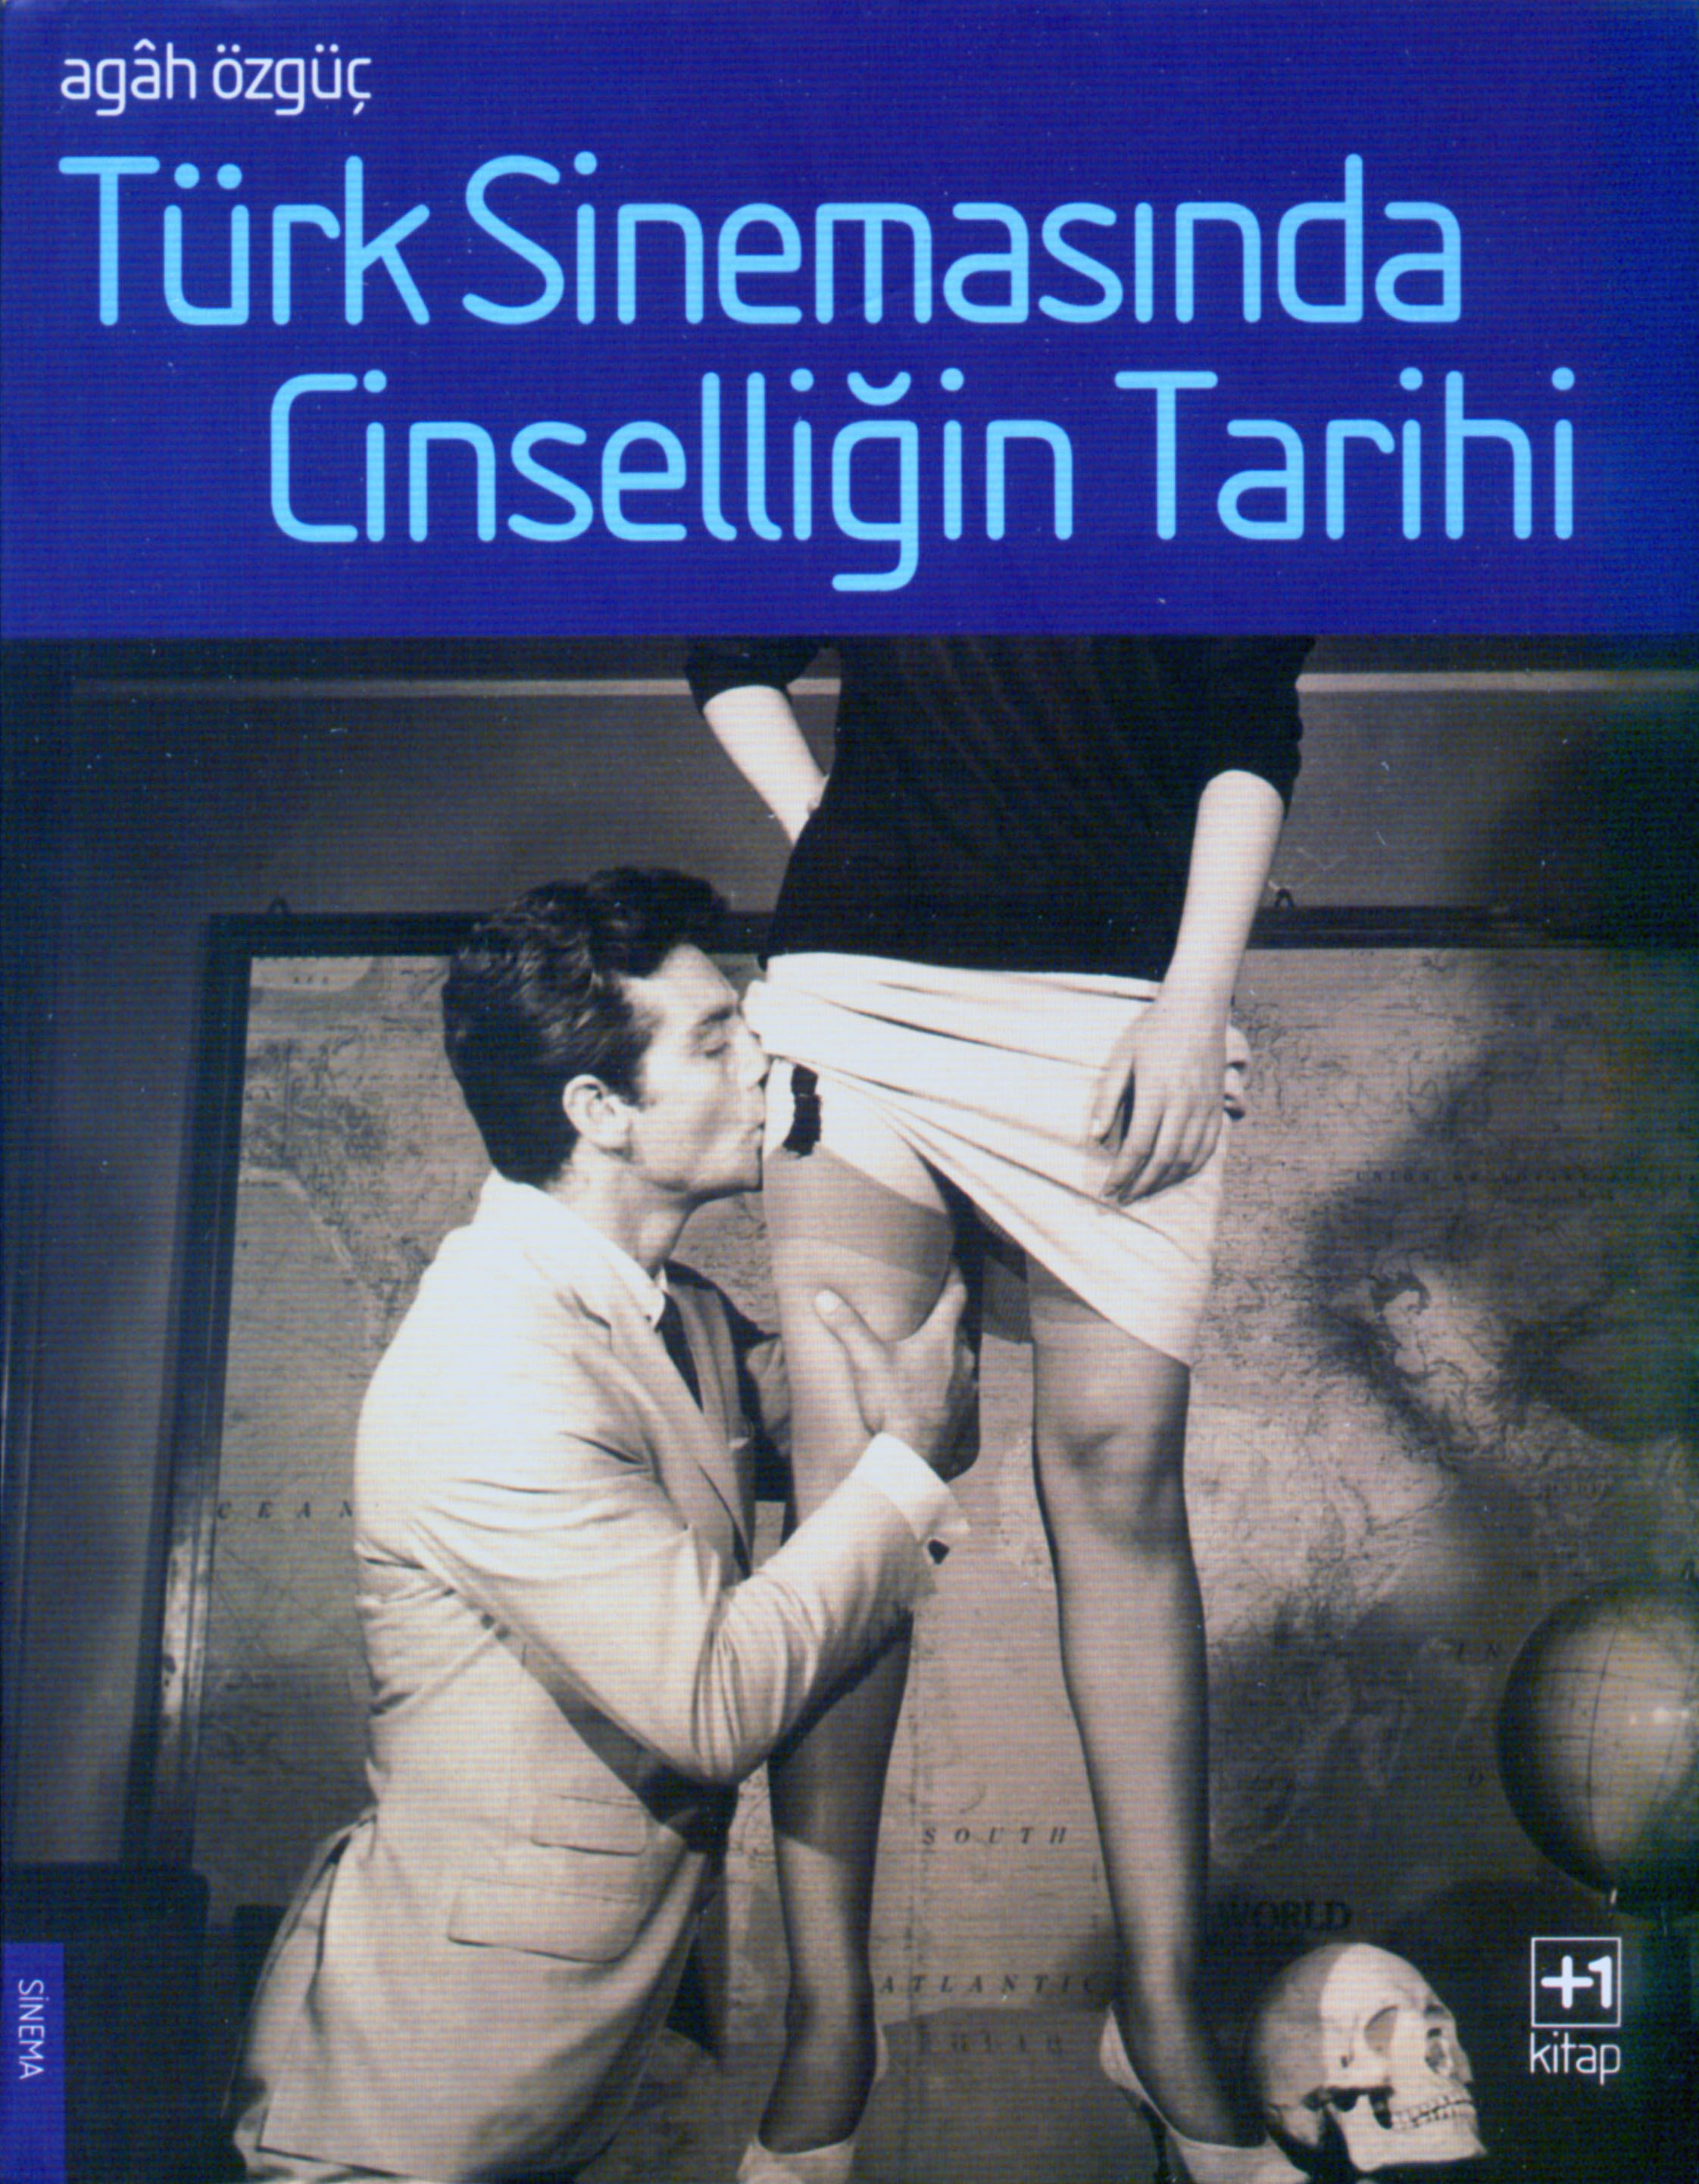 Turk Film